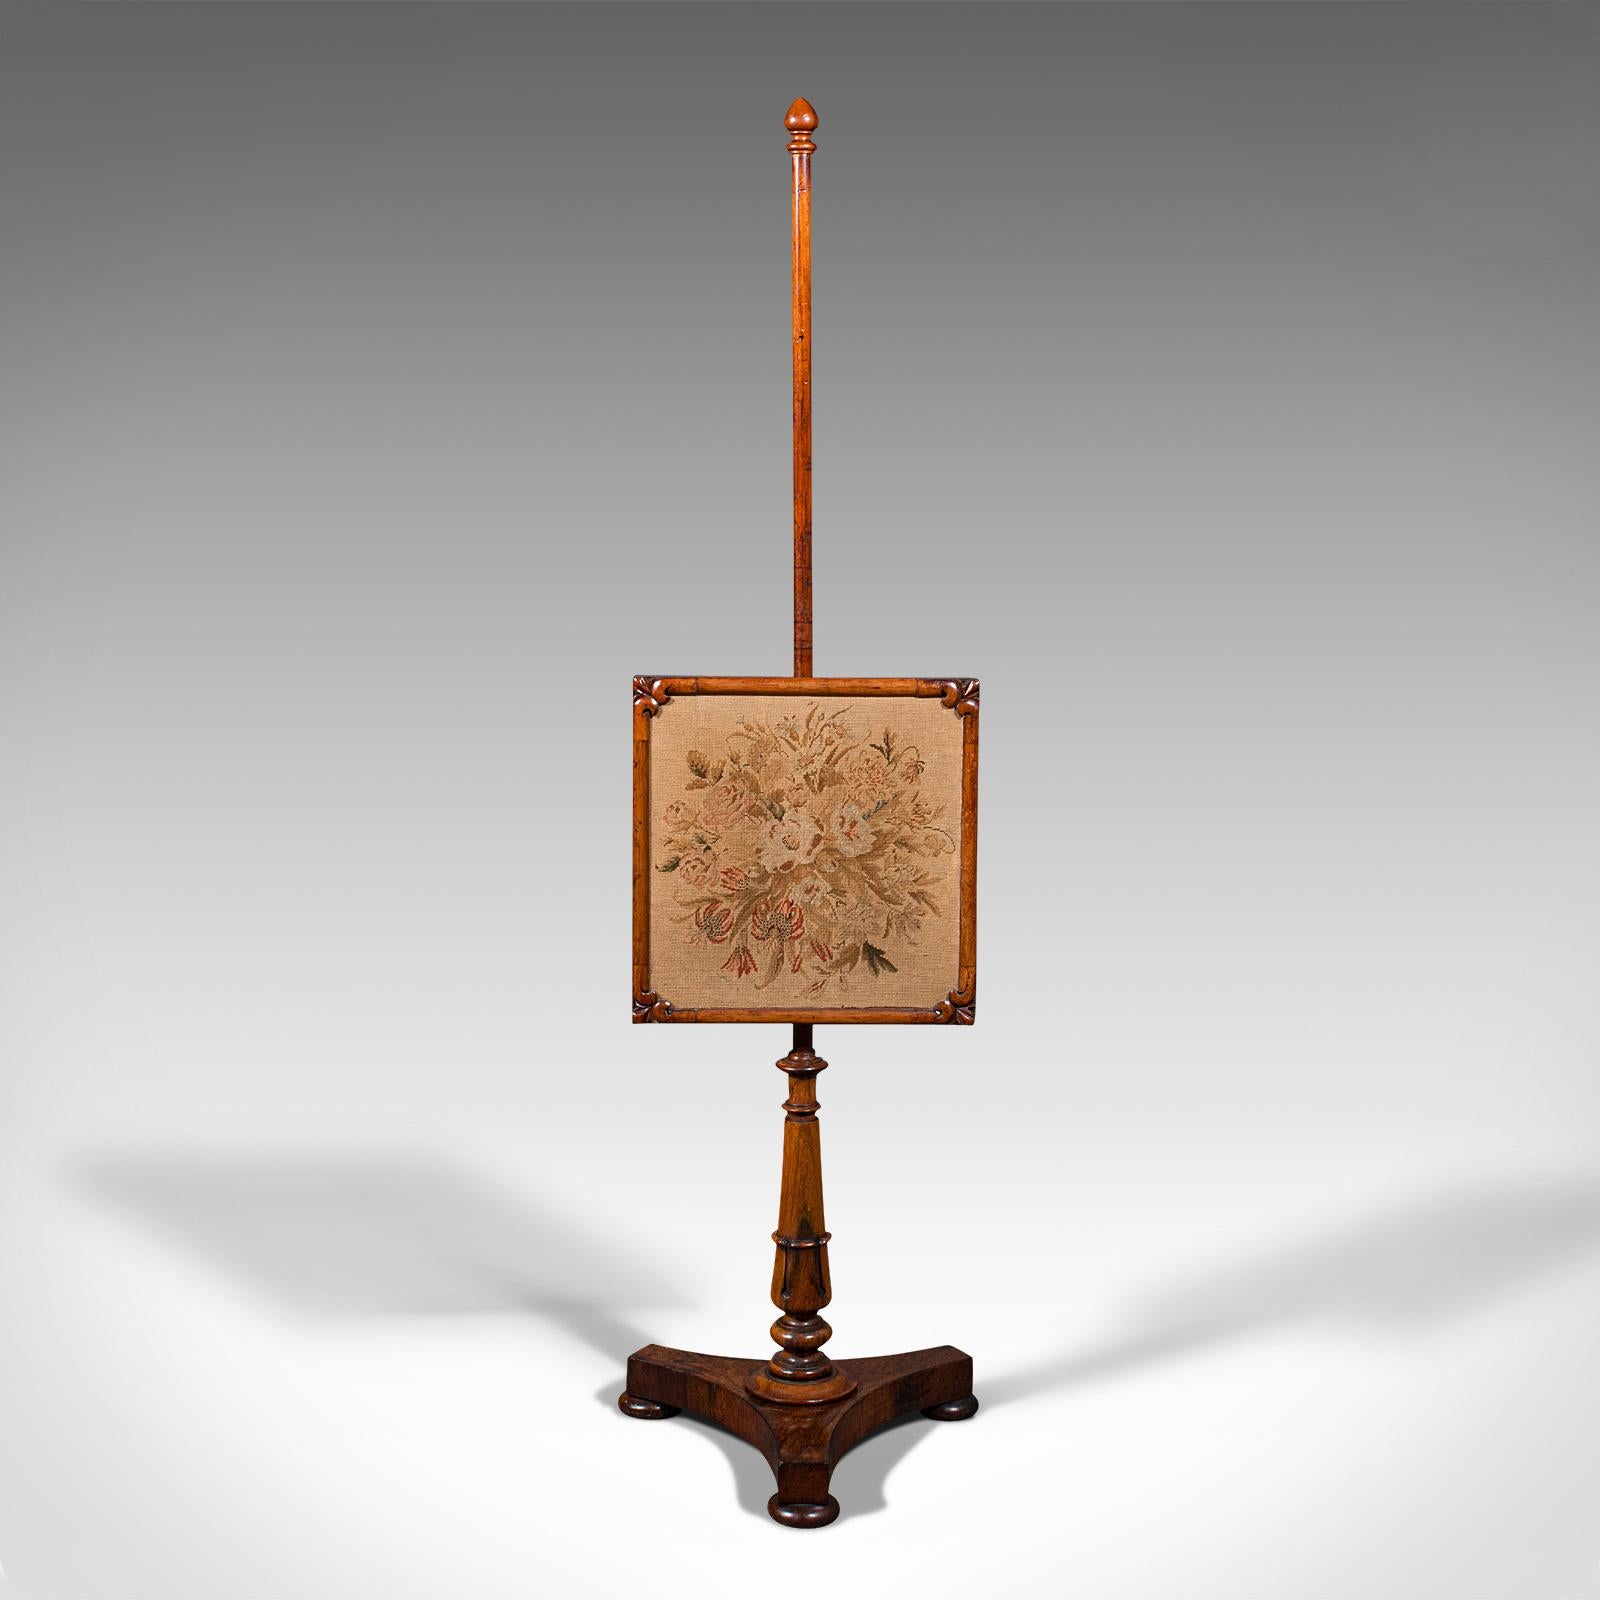 British Antique Adjustable Pole Screen, English, Fireside Panel, Tapestry, Regency, 1820